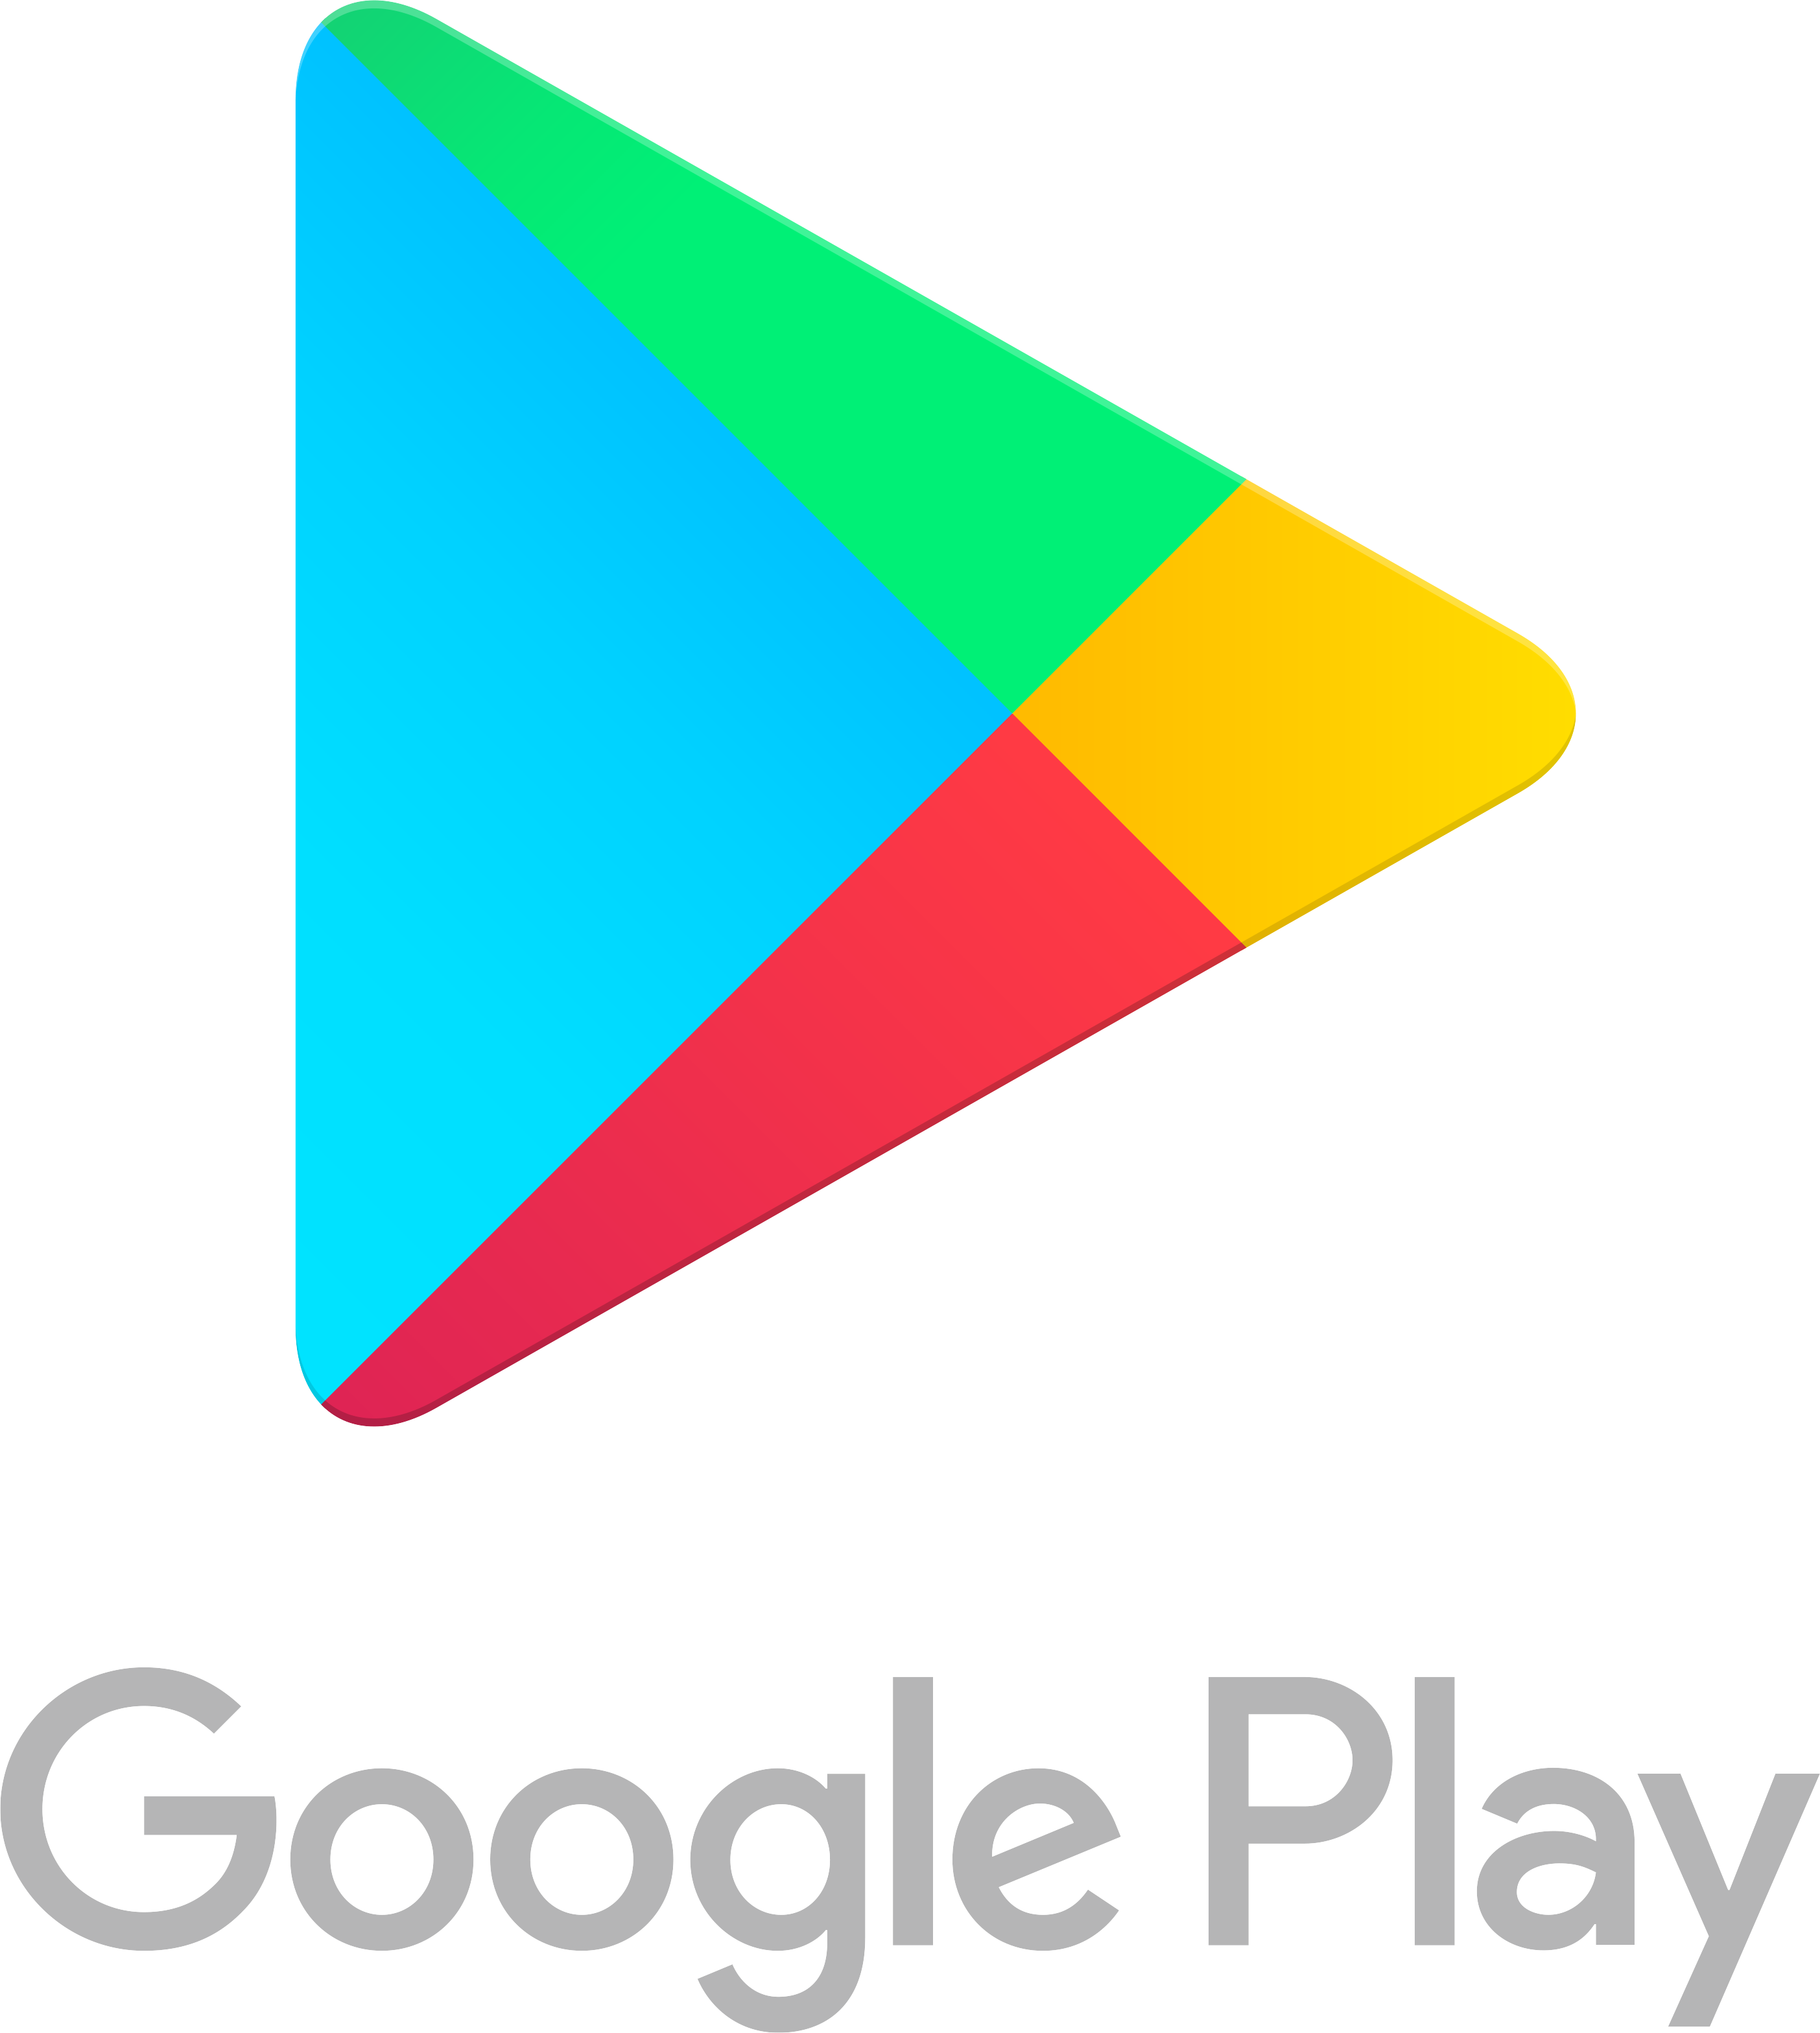 Download Play Google App Logo Android Store Hq Png Image Freepngimg